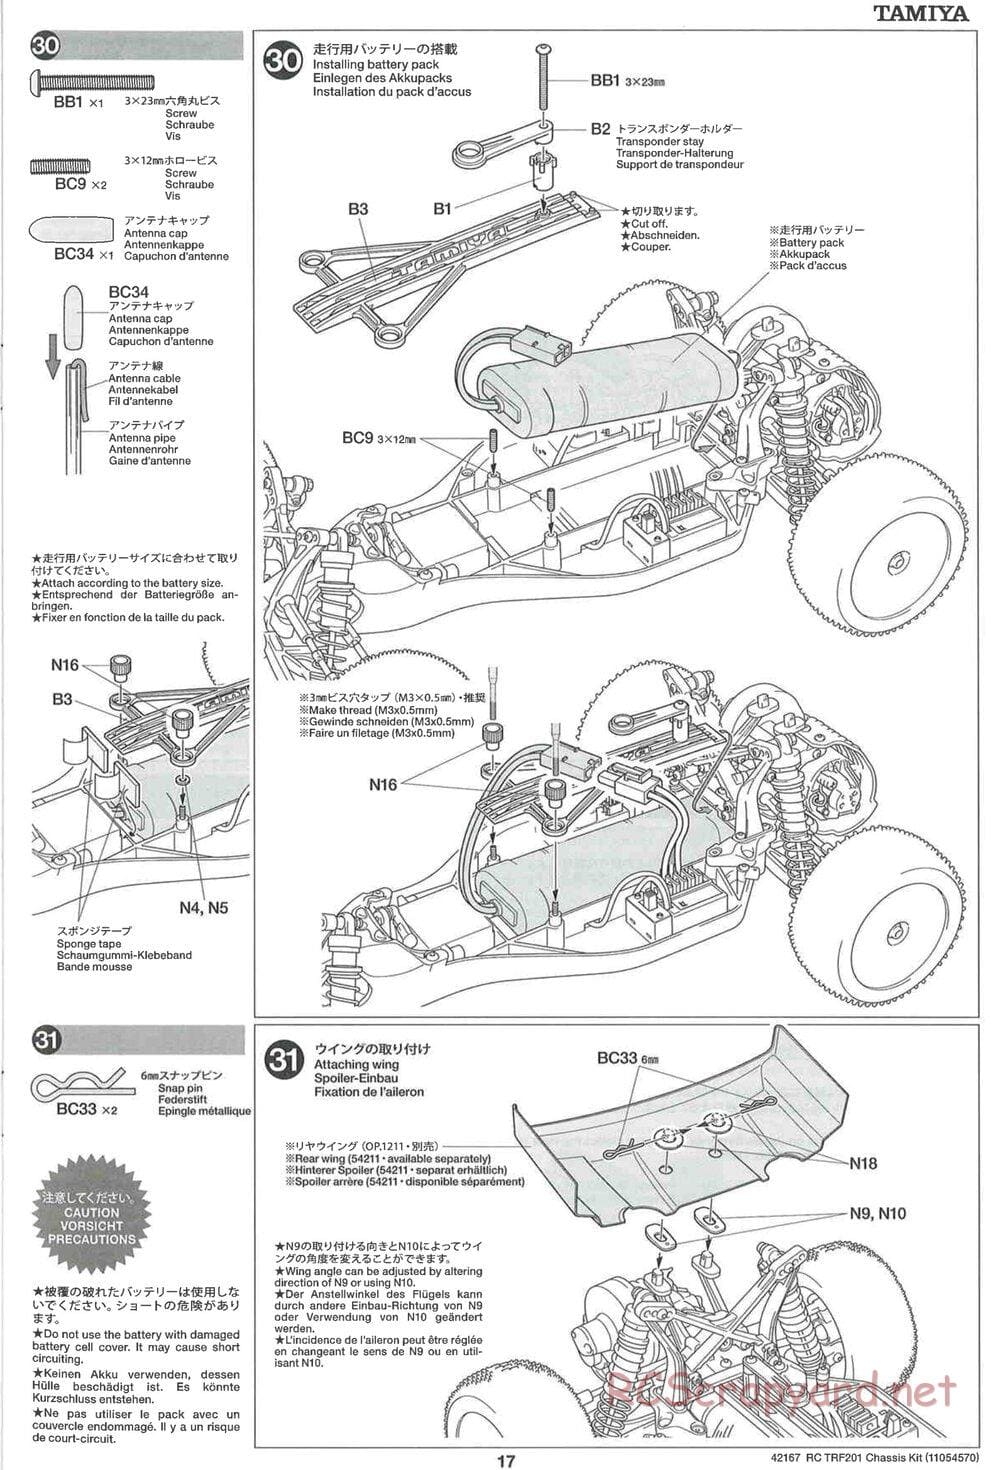 Tamiya - TRF201 Chassis - Manual - Page 17